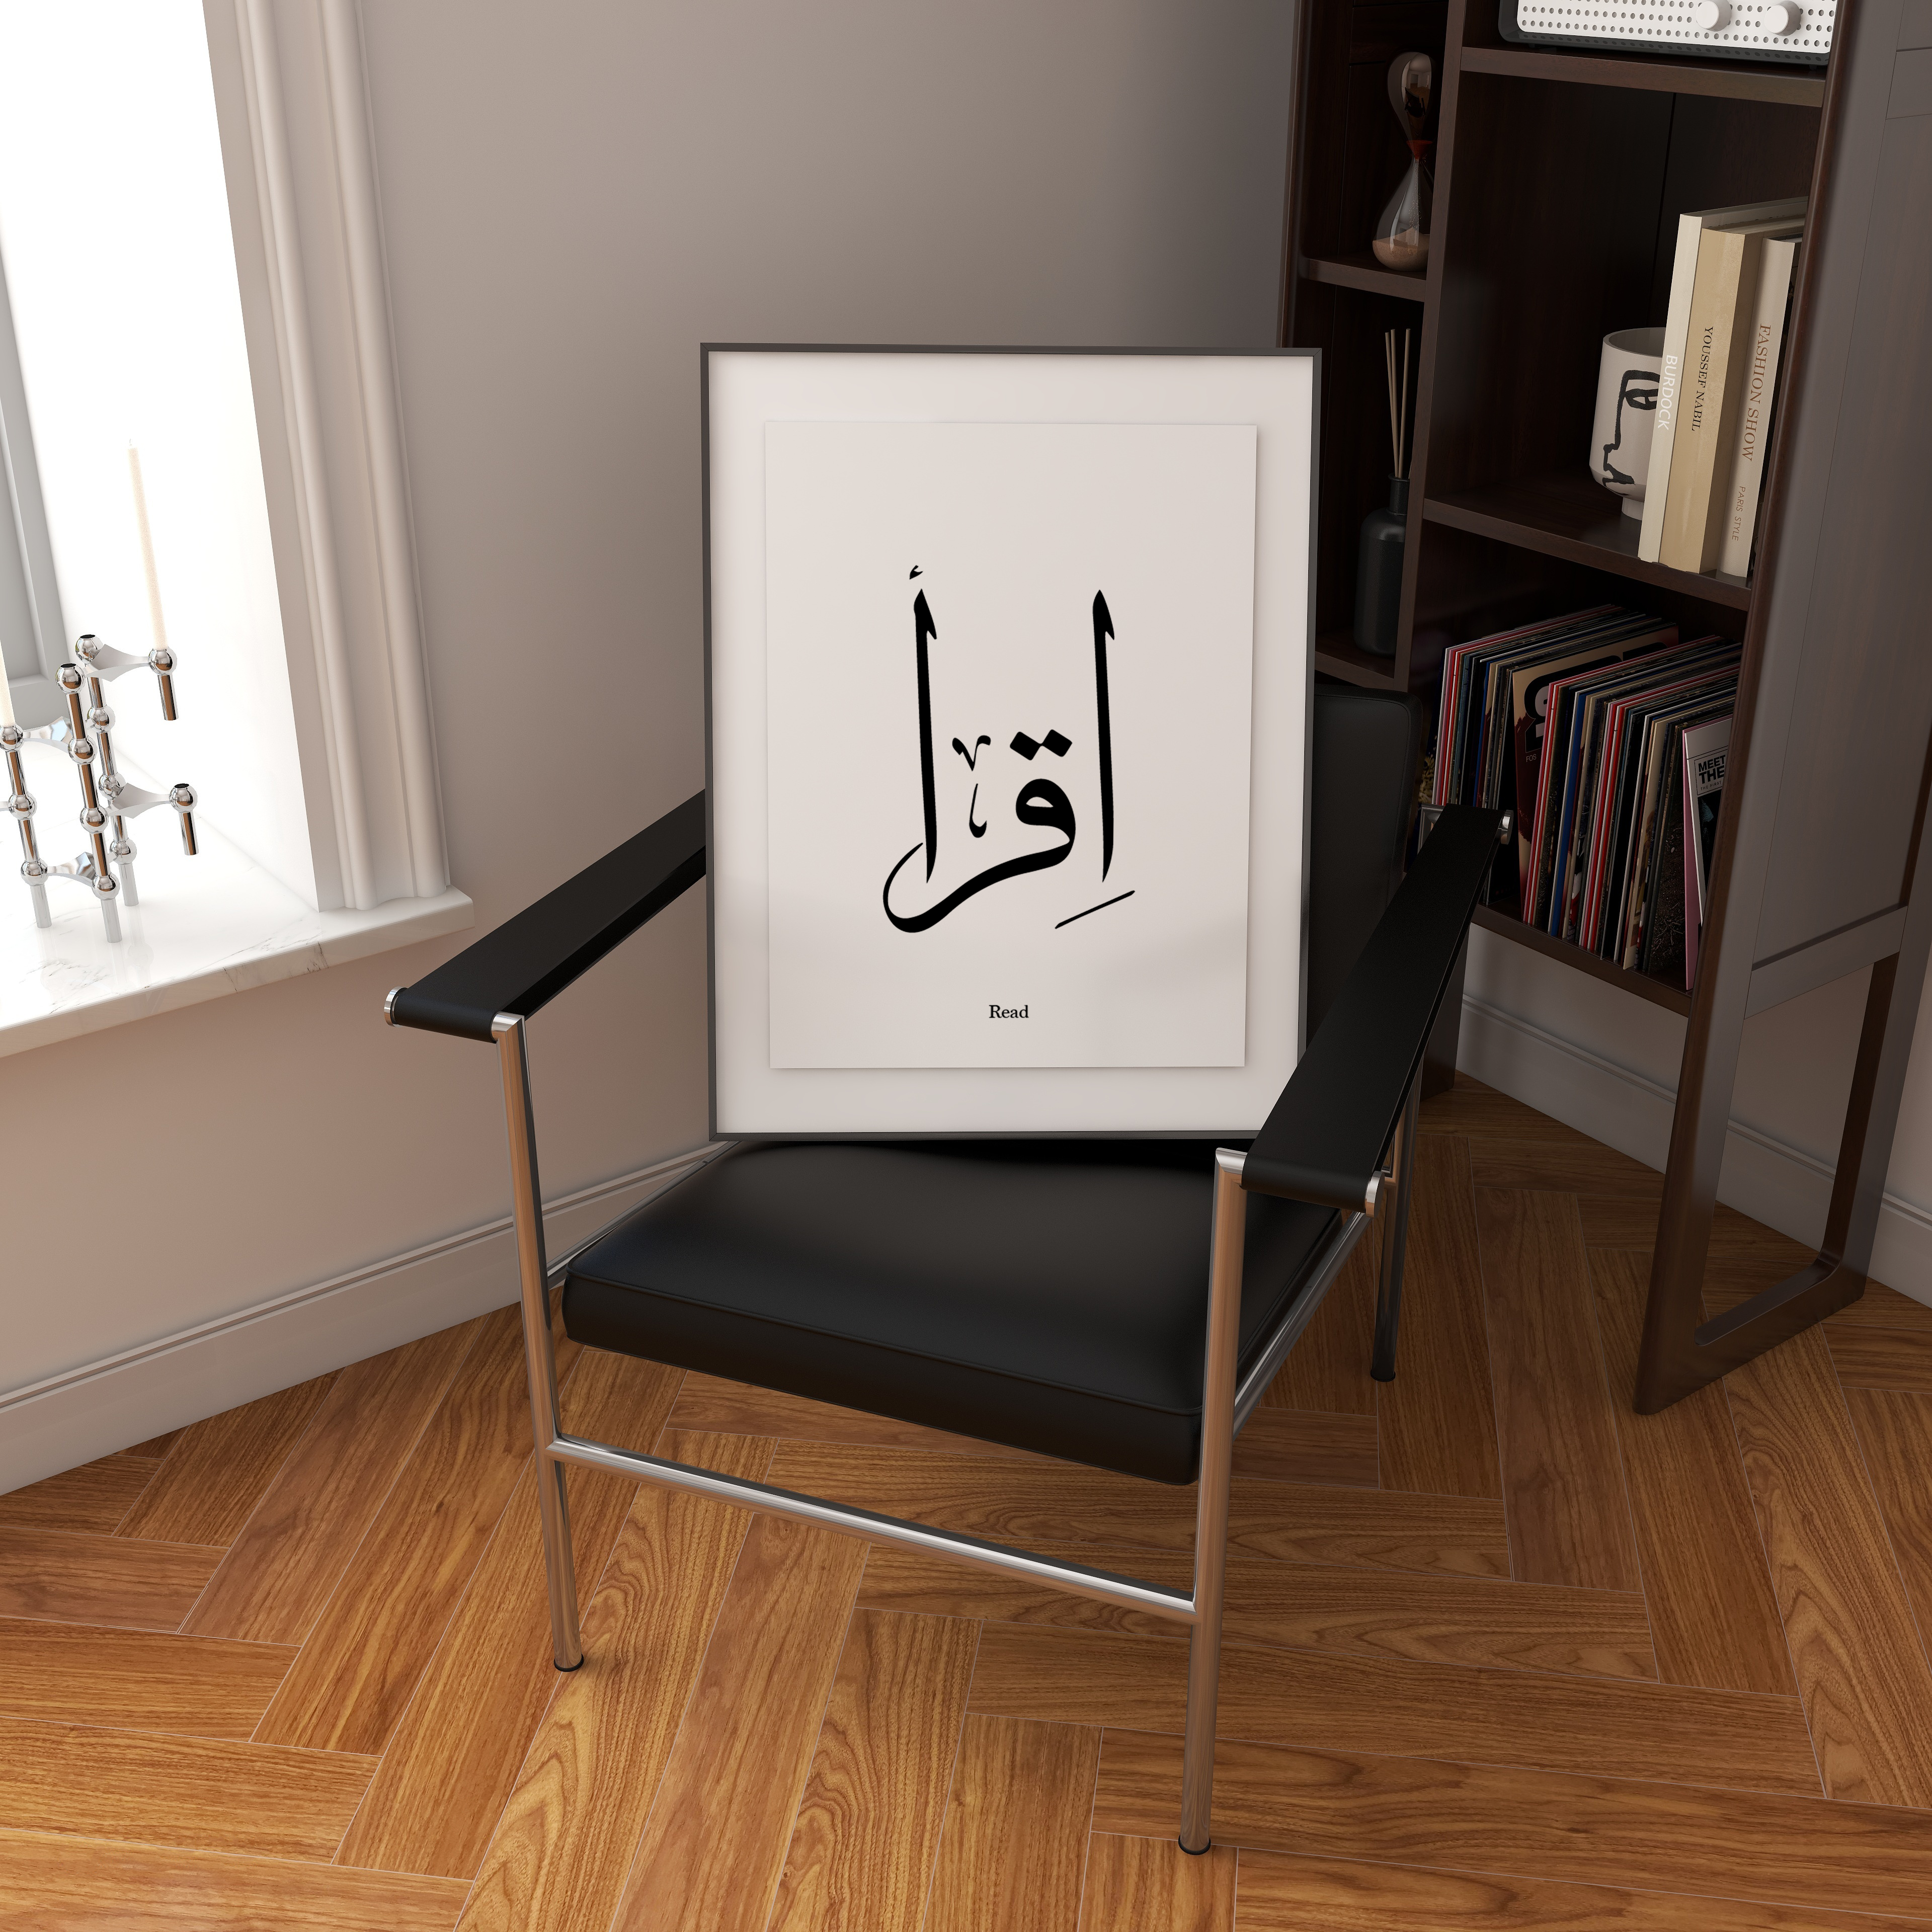 Islamic Wall Art Quote "Iqra" - Islamic Wall Art Print | Home Decor | Islamic Gifts for Muslims